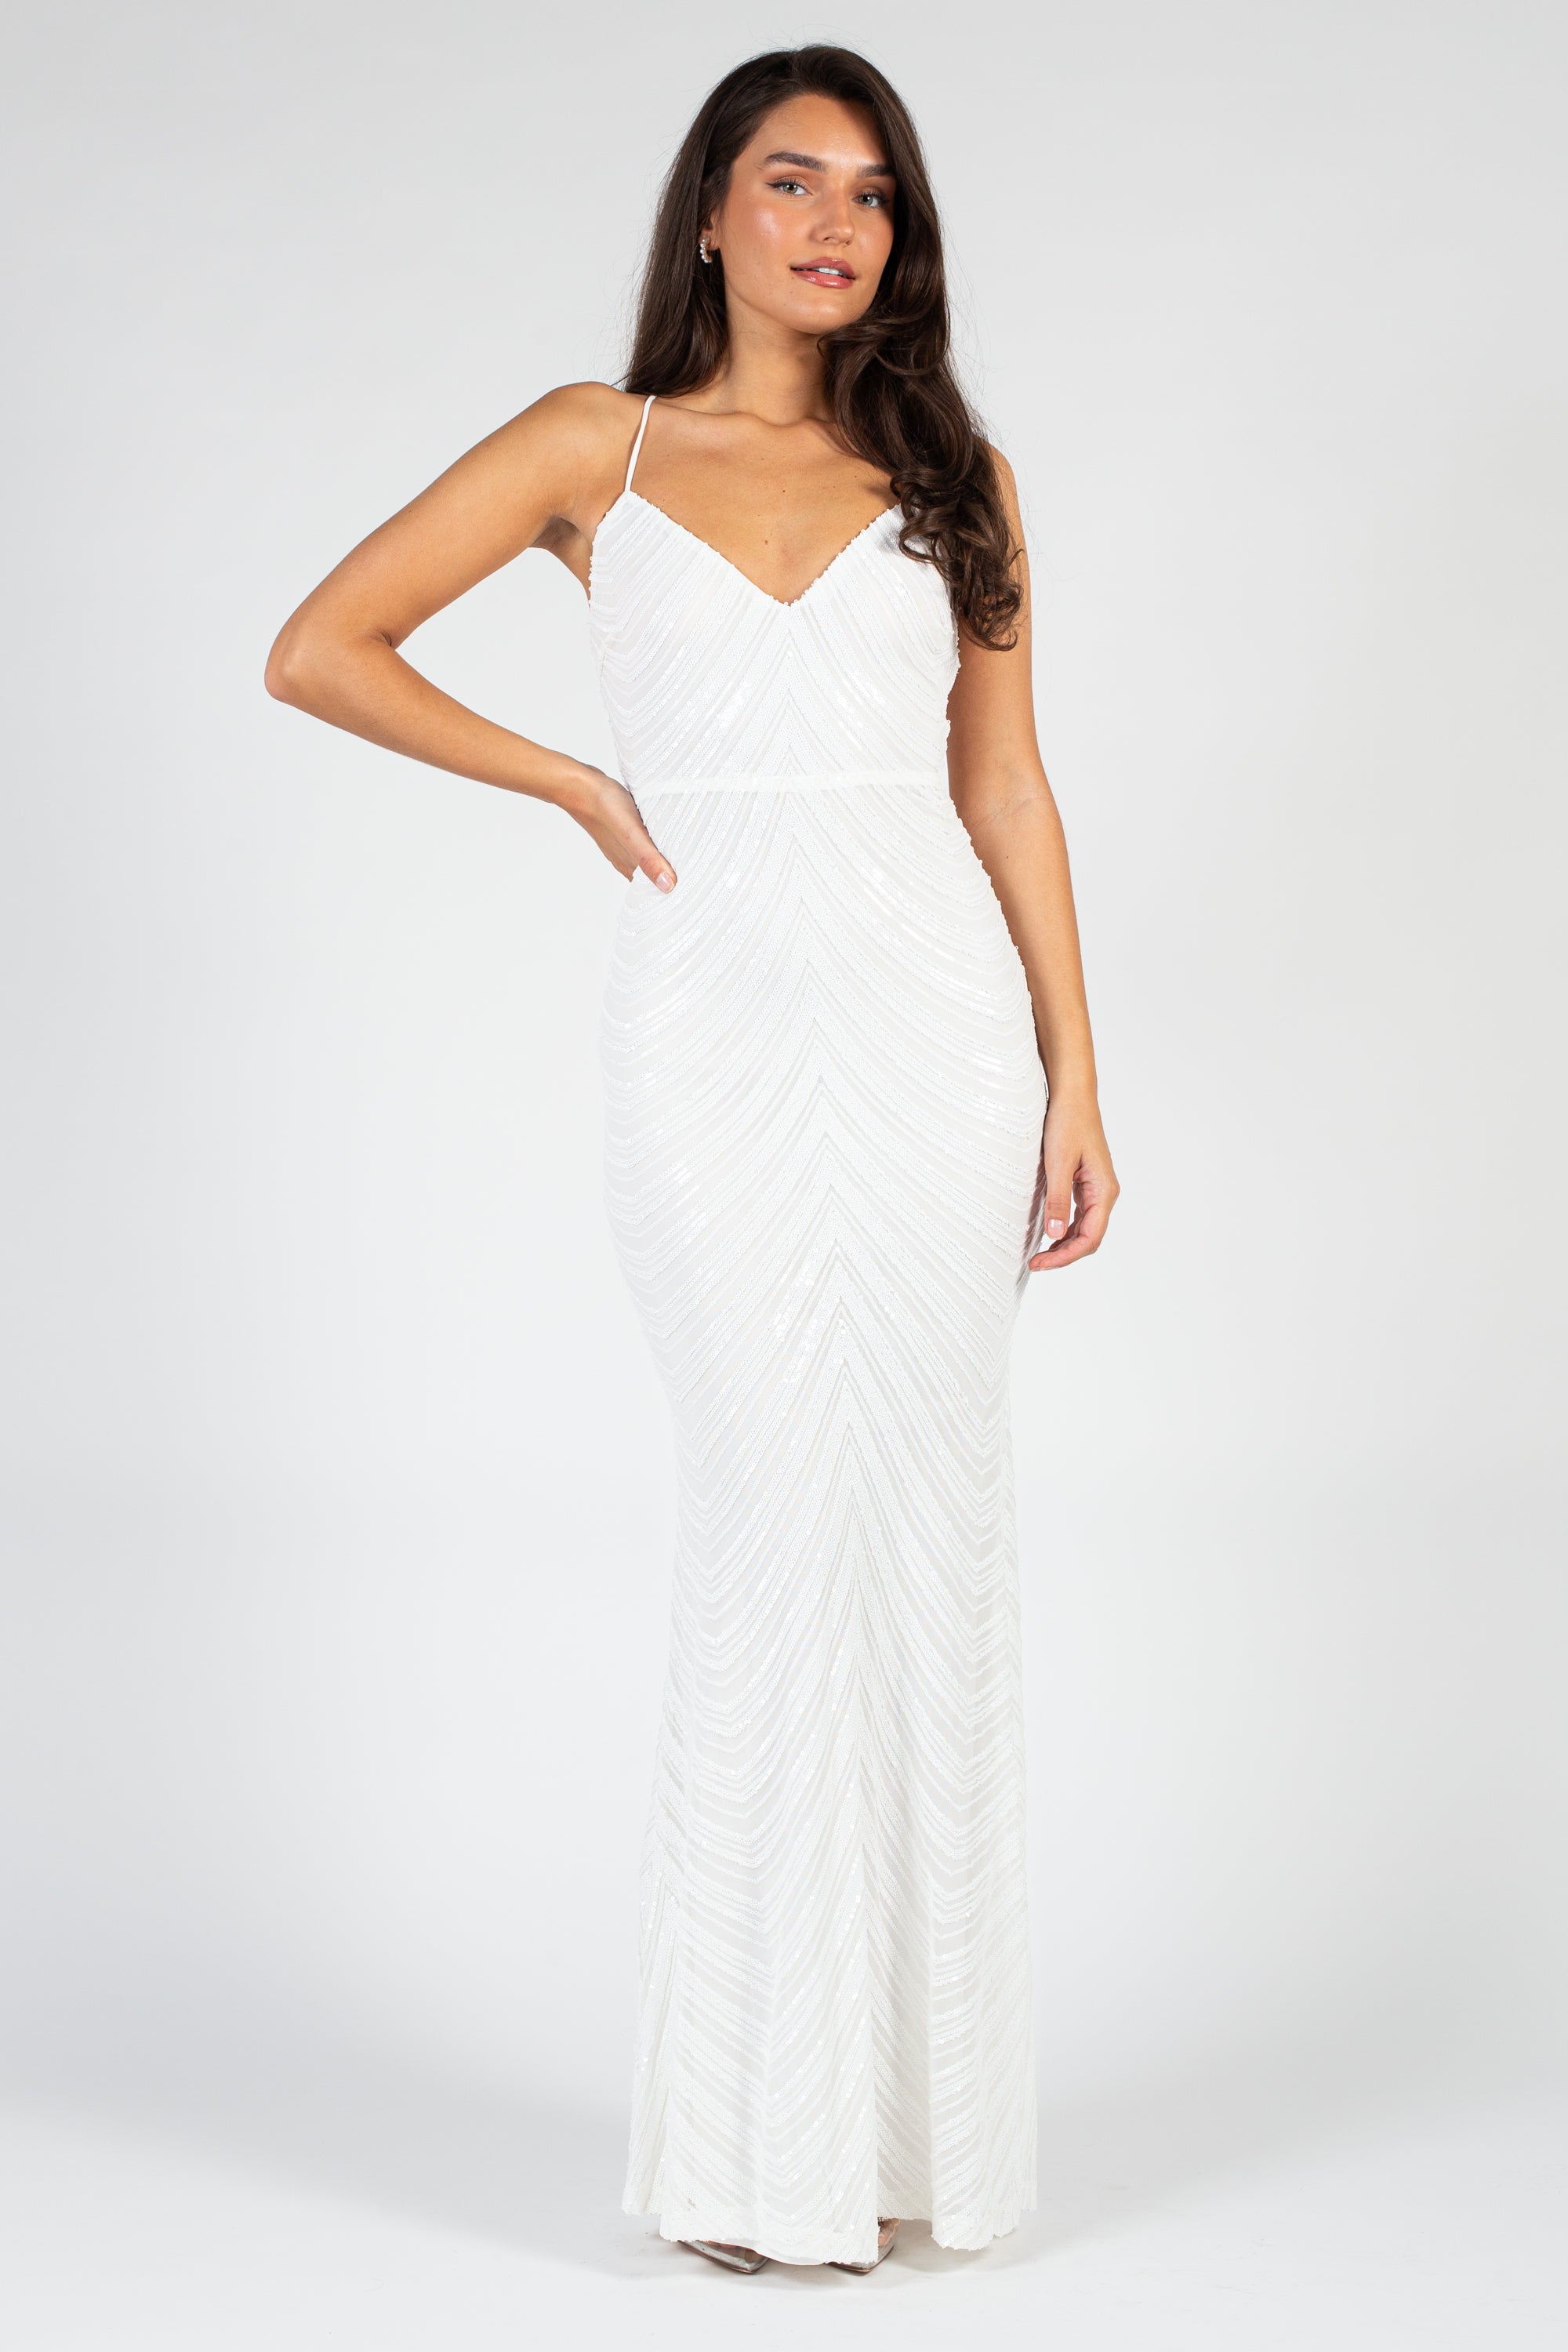 Wozhidaose Dresses for Women 2023 Fashion Lady Elegant V-Neck Short Sleeve  Pure Color Party Dress white dress women - Walmart.com